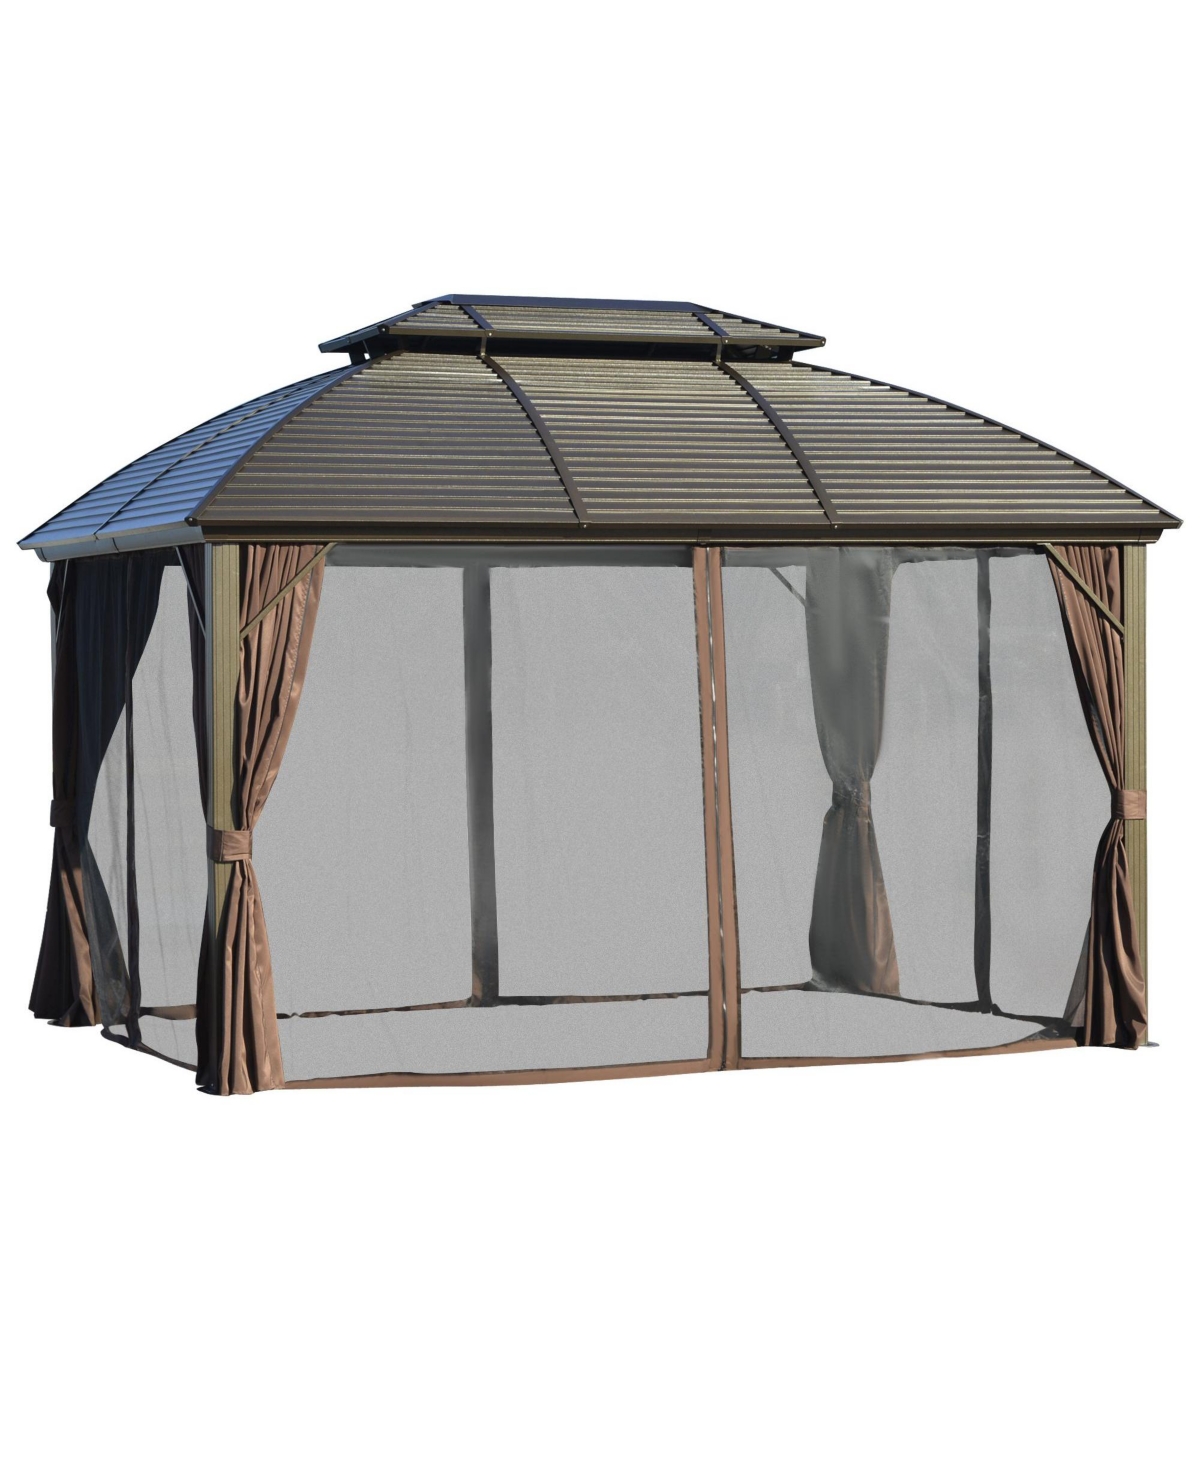 10' x 12' Metal Roof Hardtop Gazebo w/ Curtains & Netting, Brown - Brown